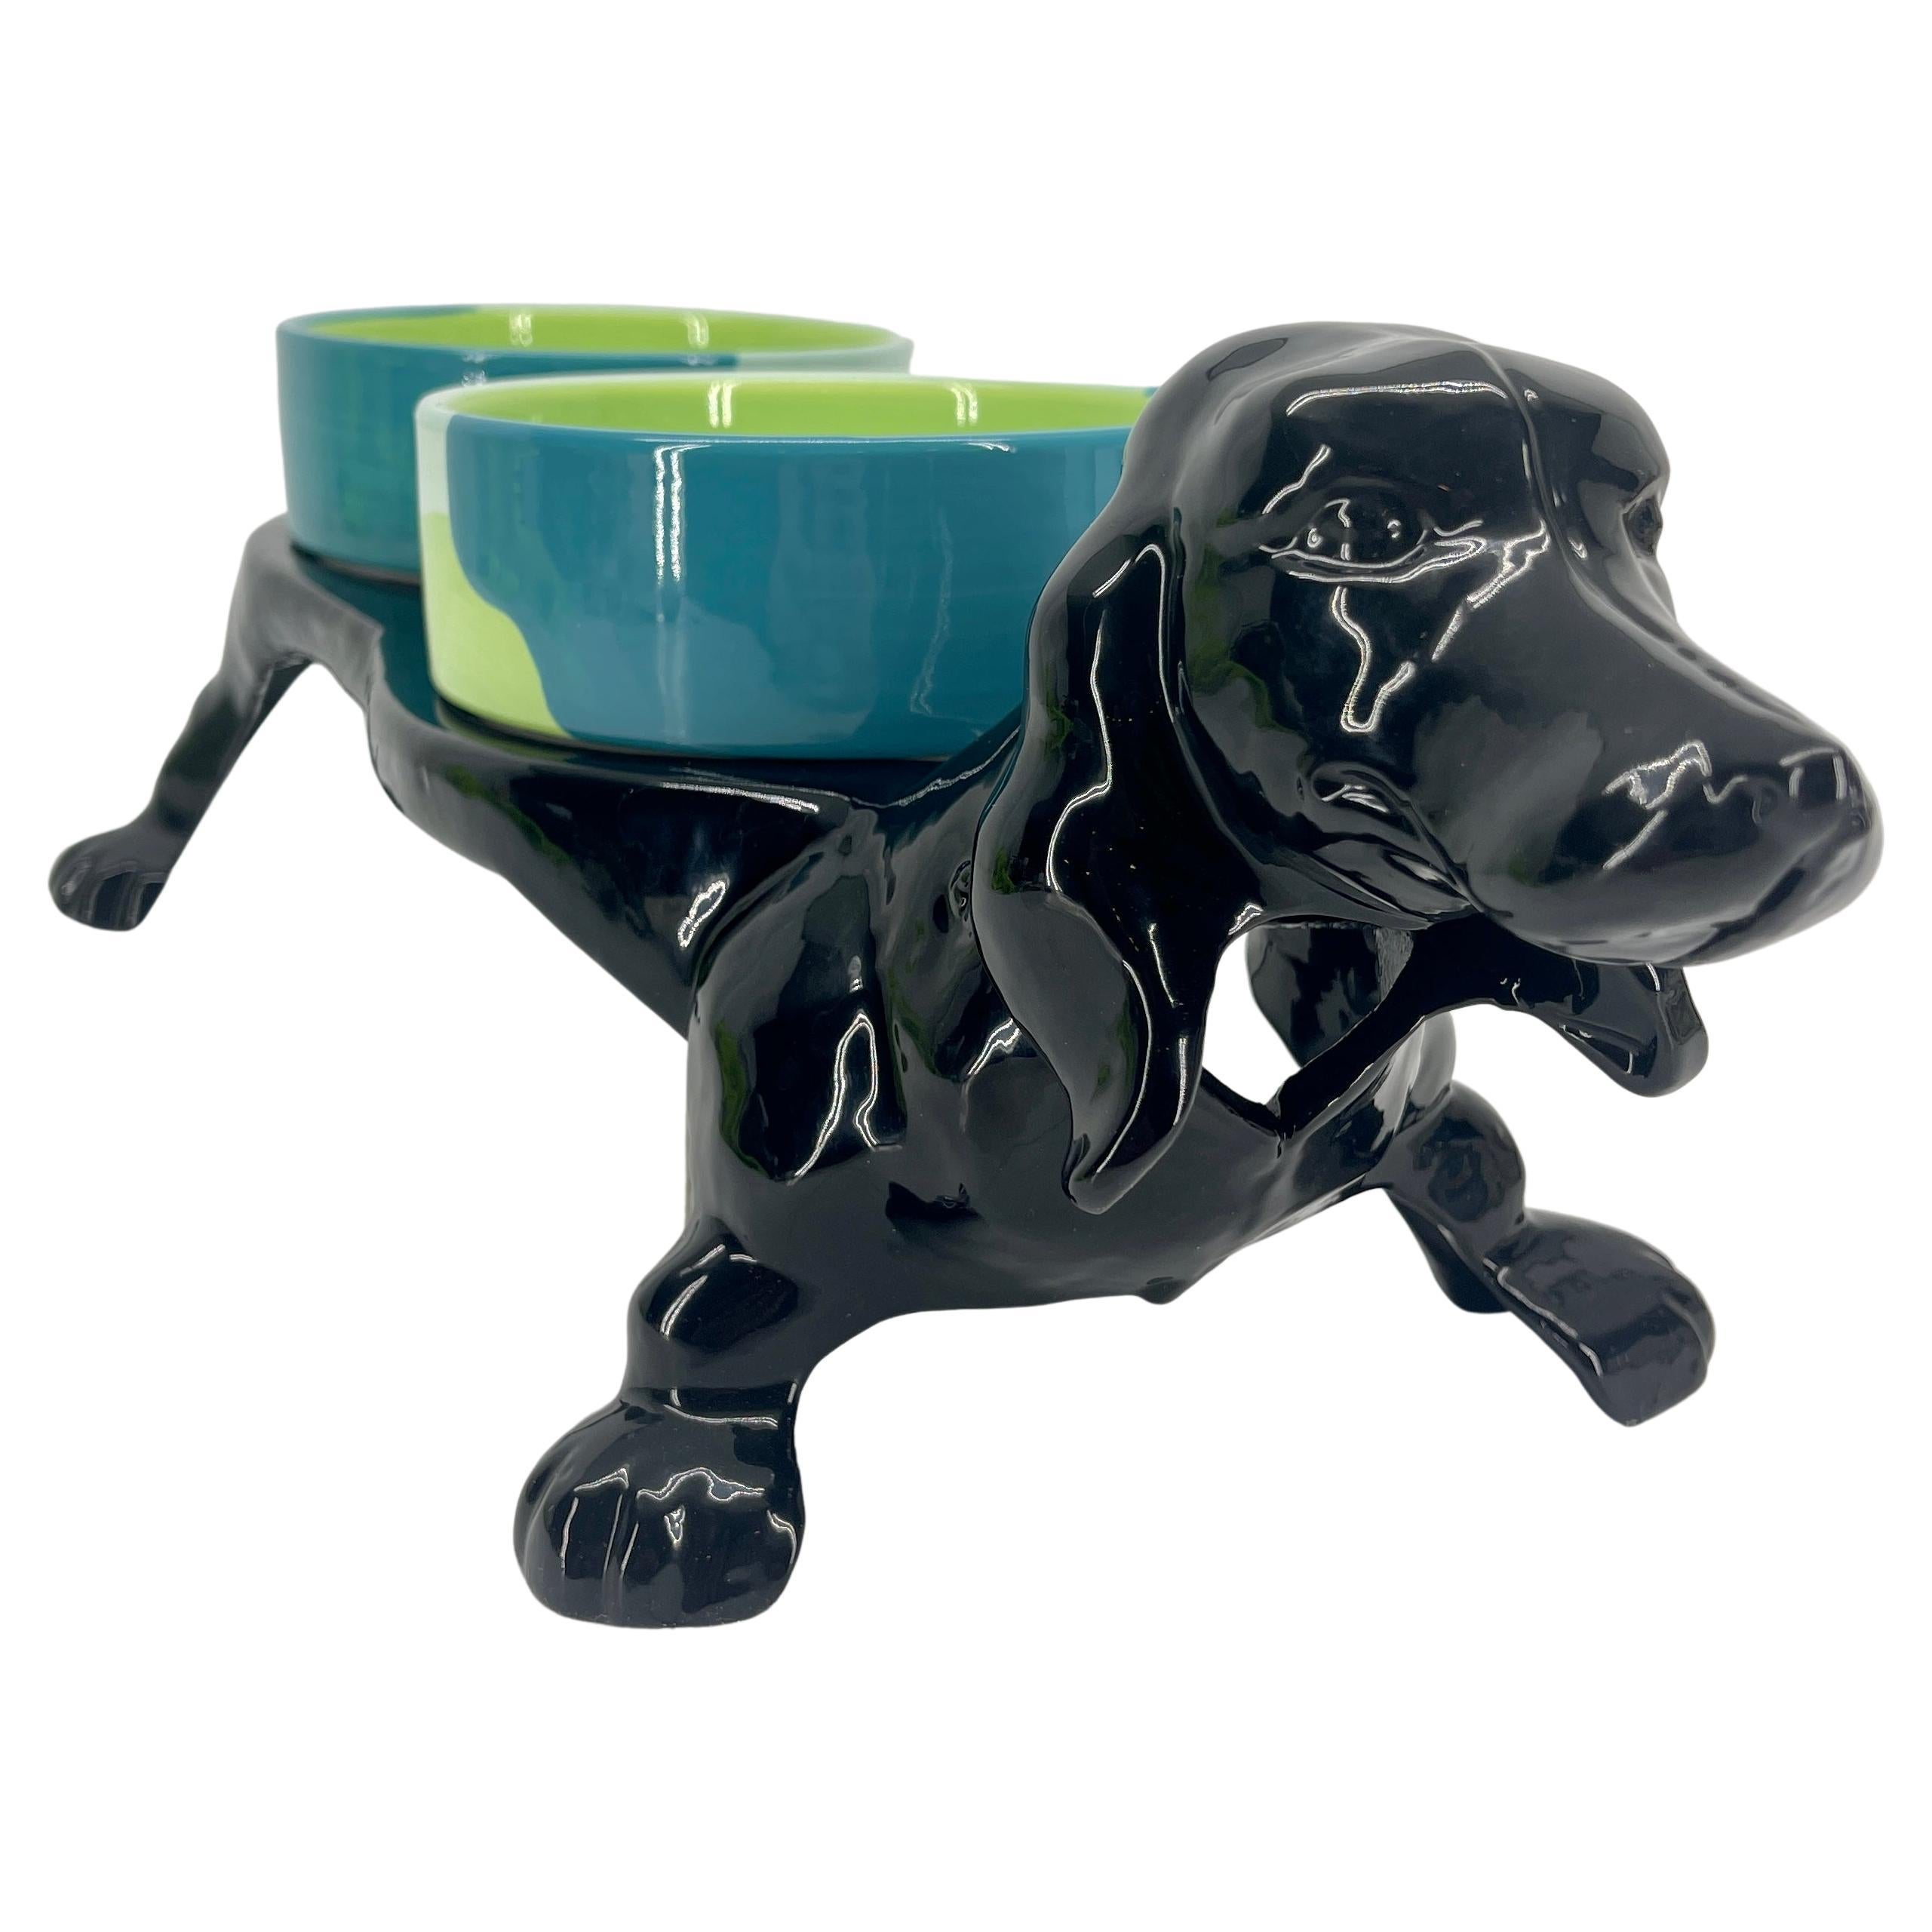 https://a.1stdibscdn.com/vintage-cast-iron-dachshund-dog-bowl-feeder-circa-1920s-for-sale/f_9434/f_285784821652073669861/f_28578482_1652073670980_bg_processed.jpg